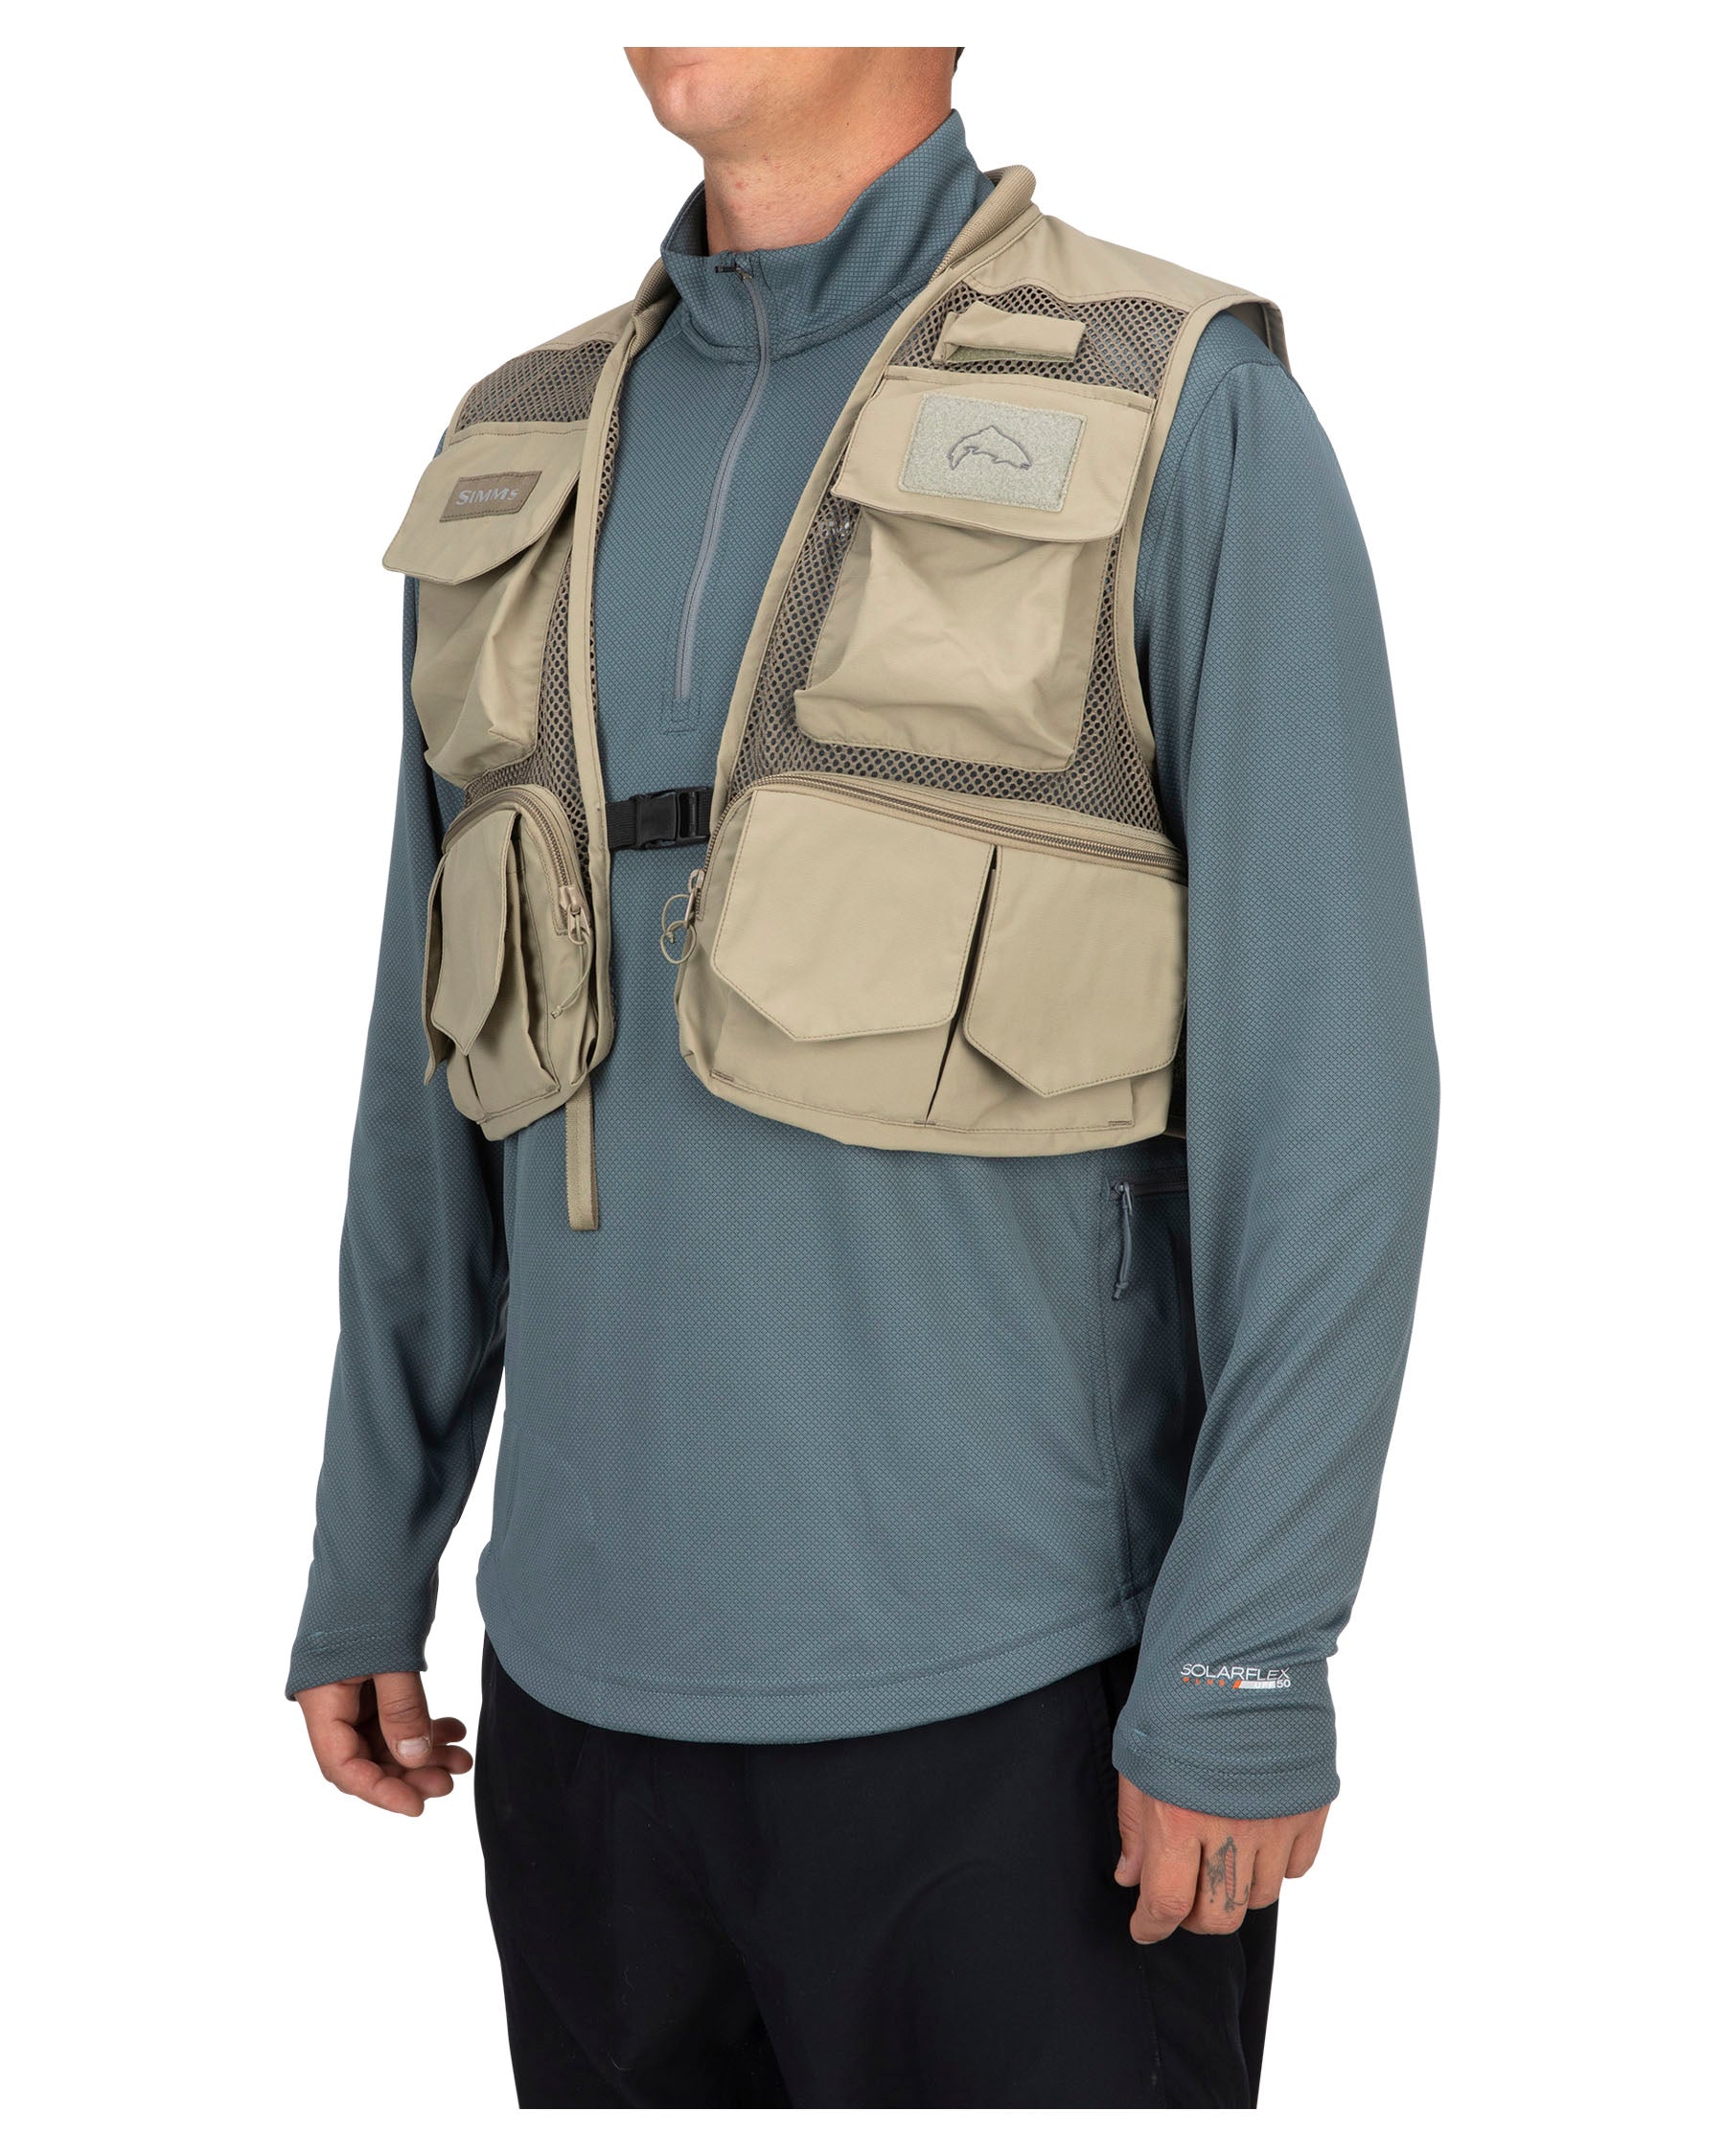 Simms Tributary Fishing Vest